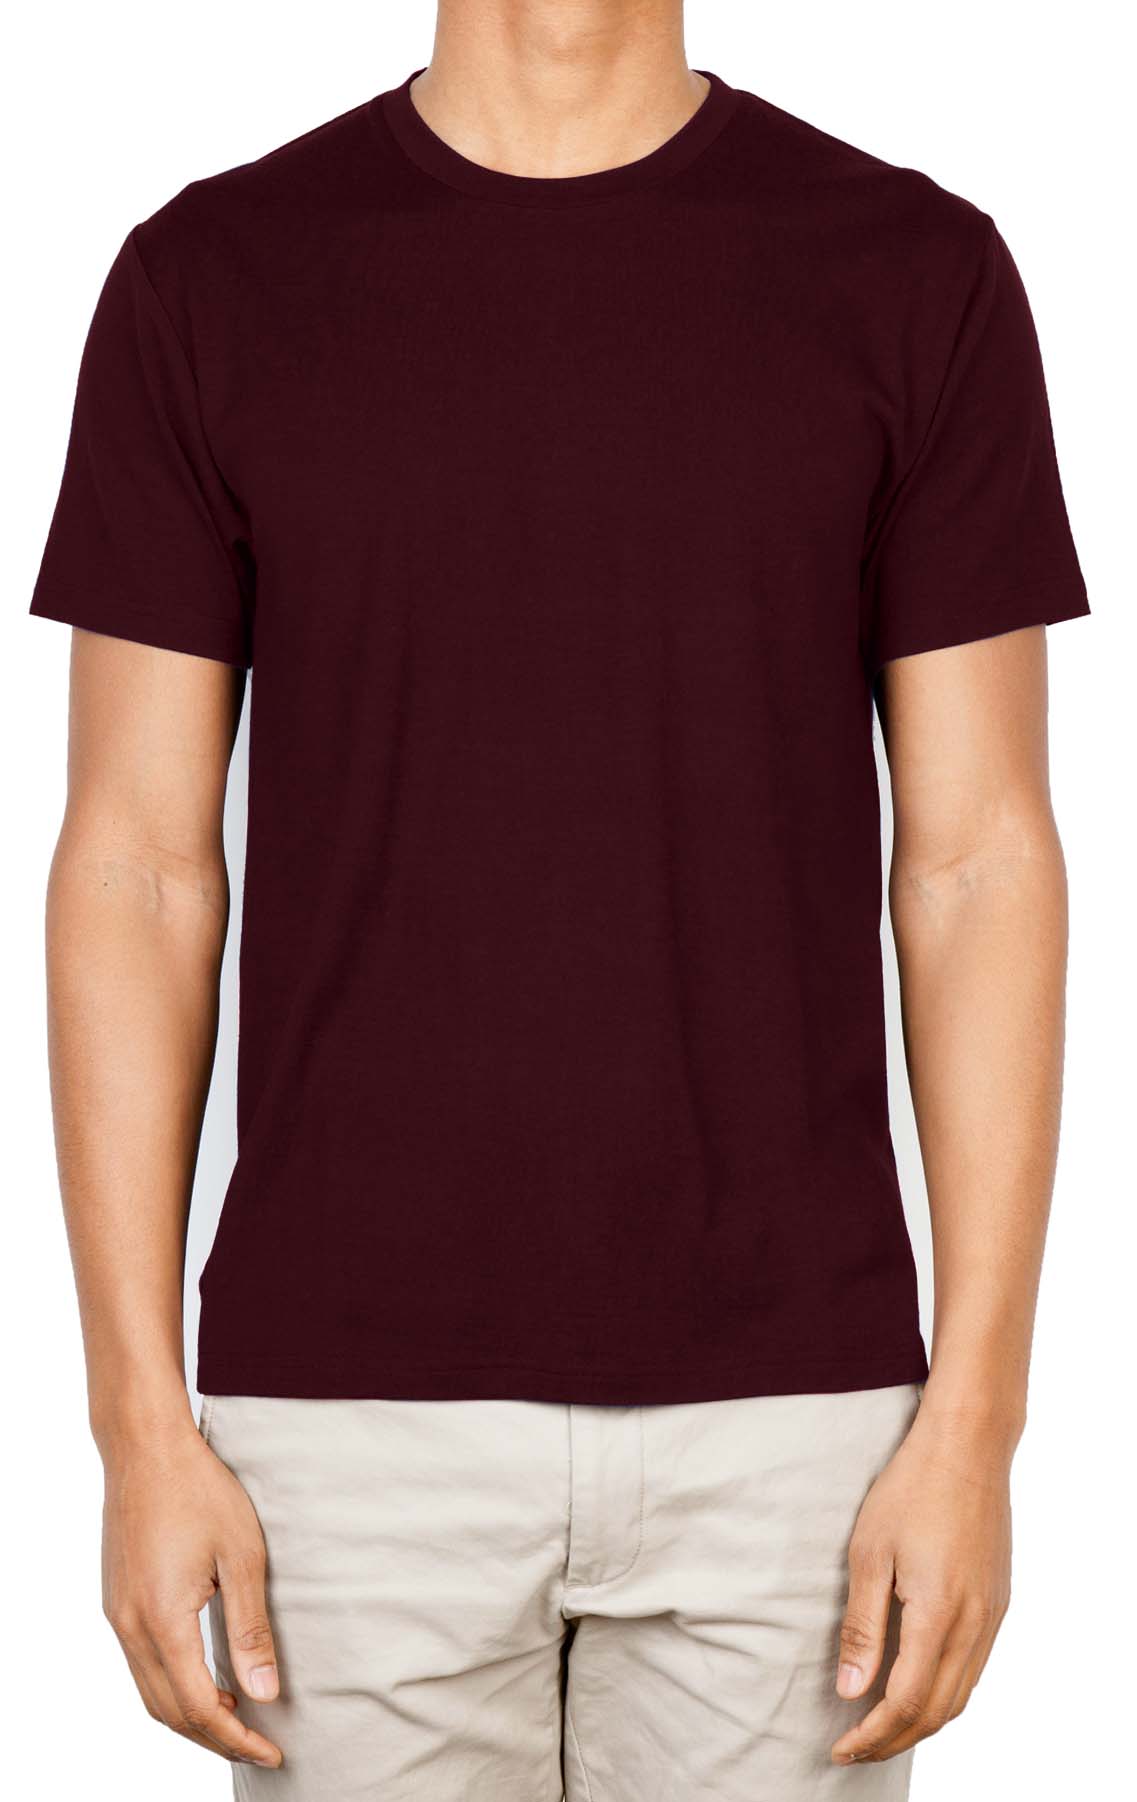 Unisex round neck solid t-shirt-half-sleeves 100 perc cotton